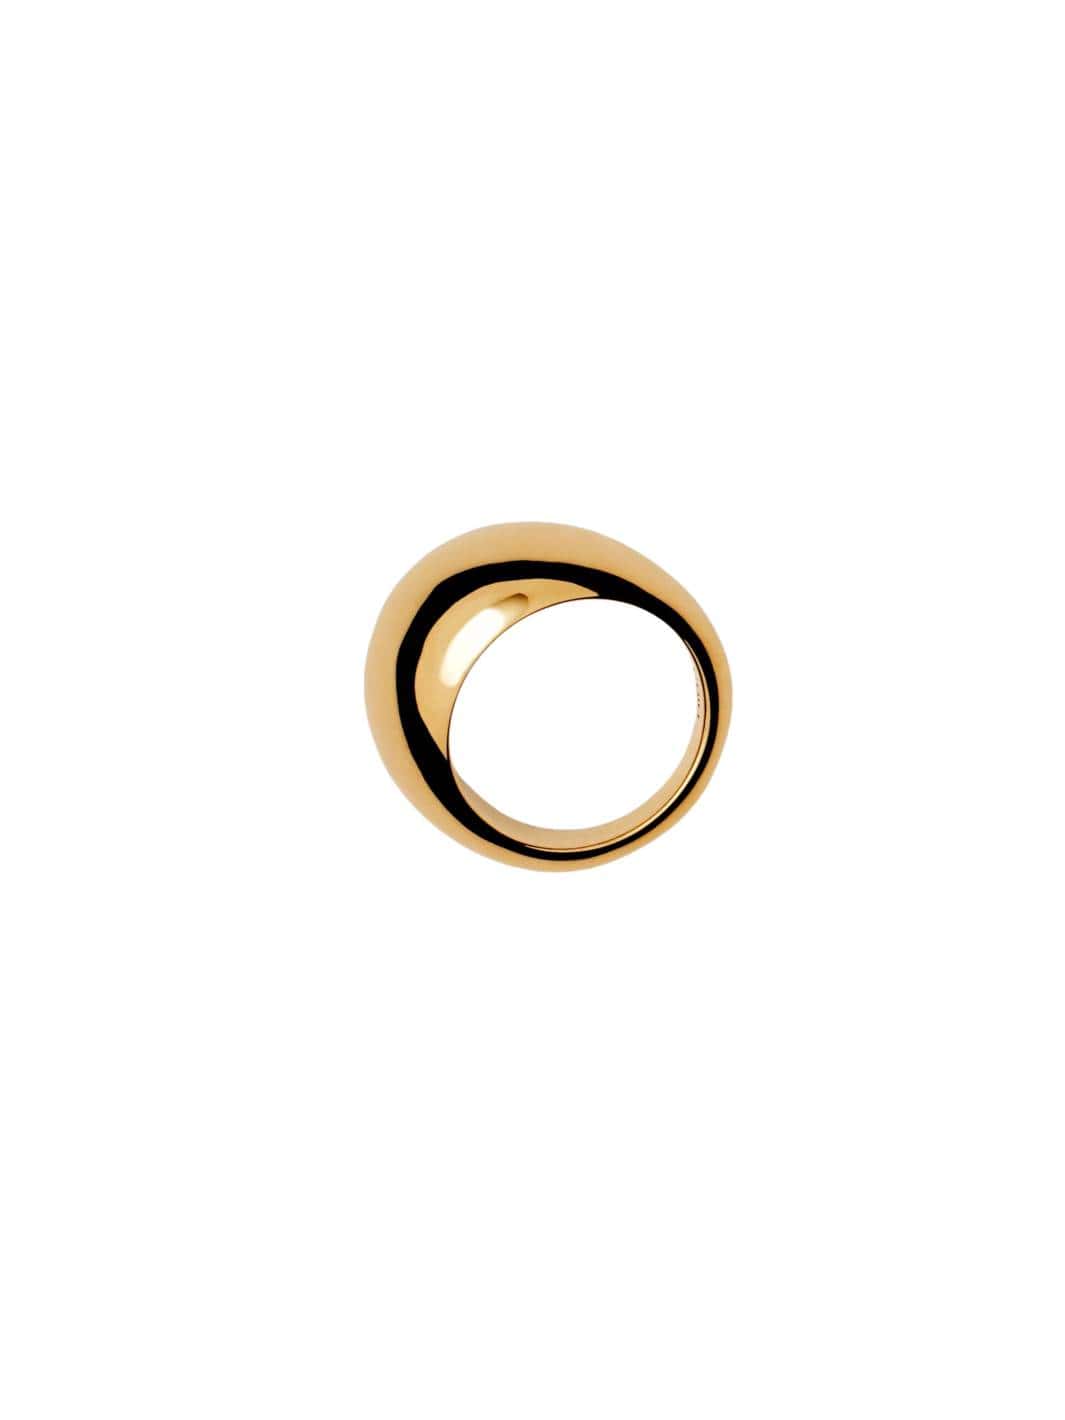 Lié Studio Accessories Ring | The Leah Ring Gold